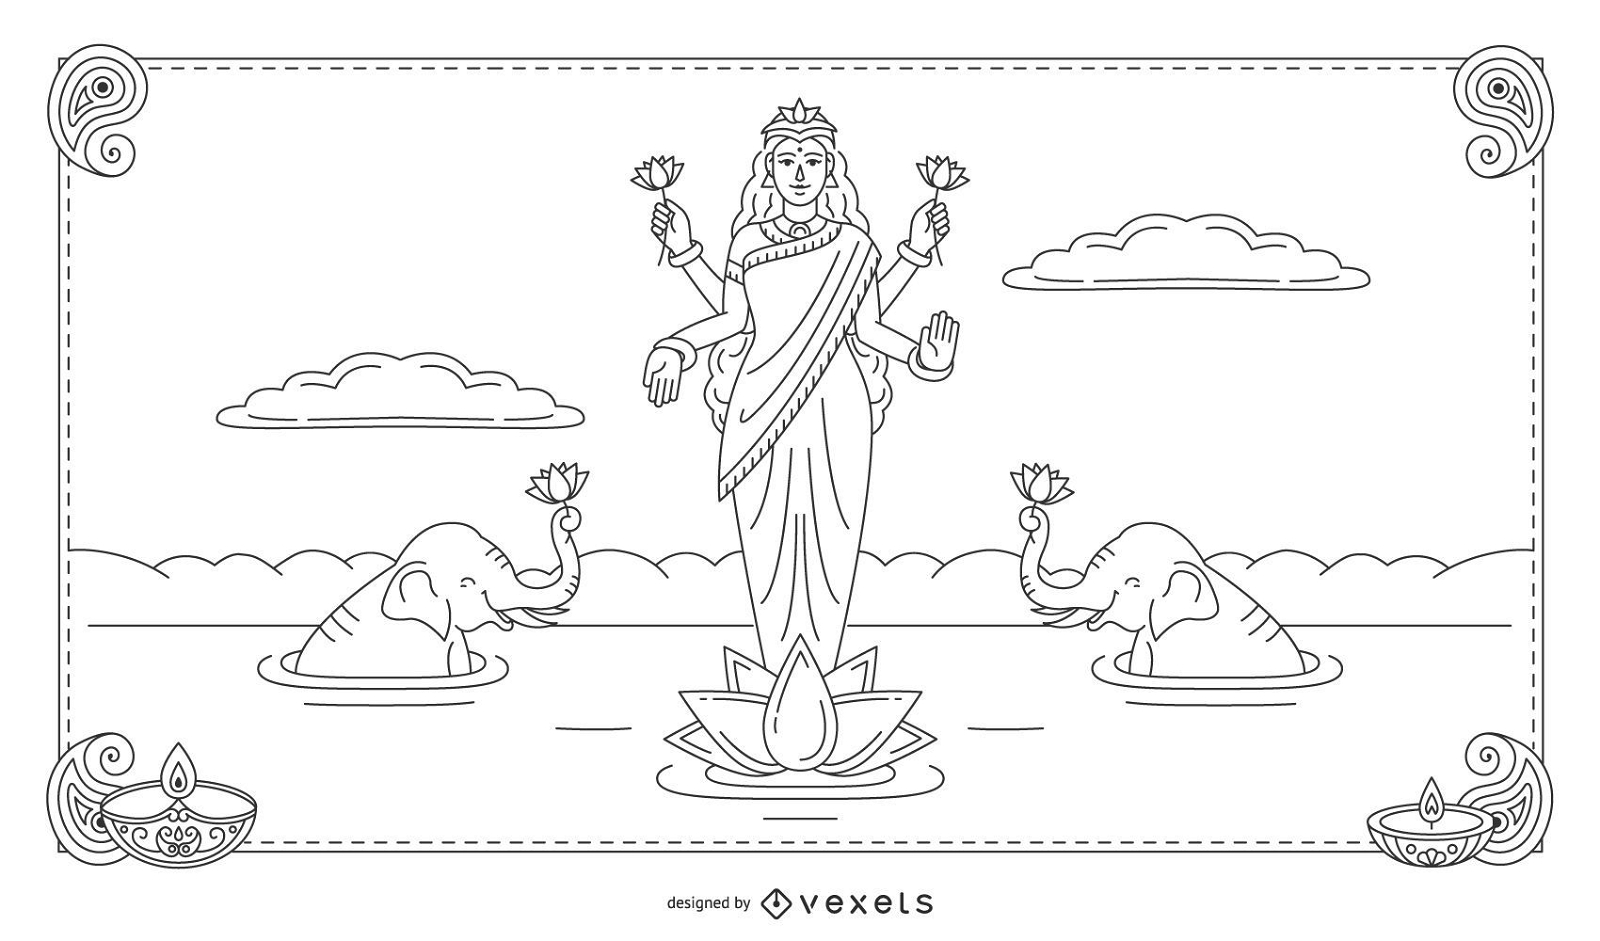 Goddess Lakshmi by vishalmisra on DeviantArt